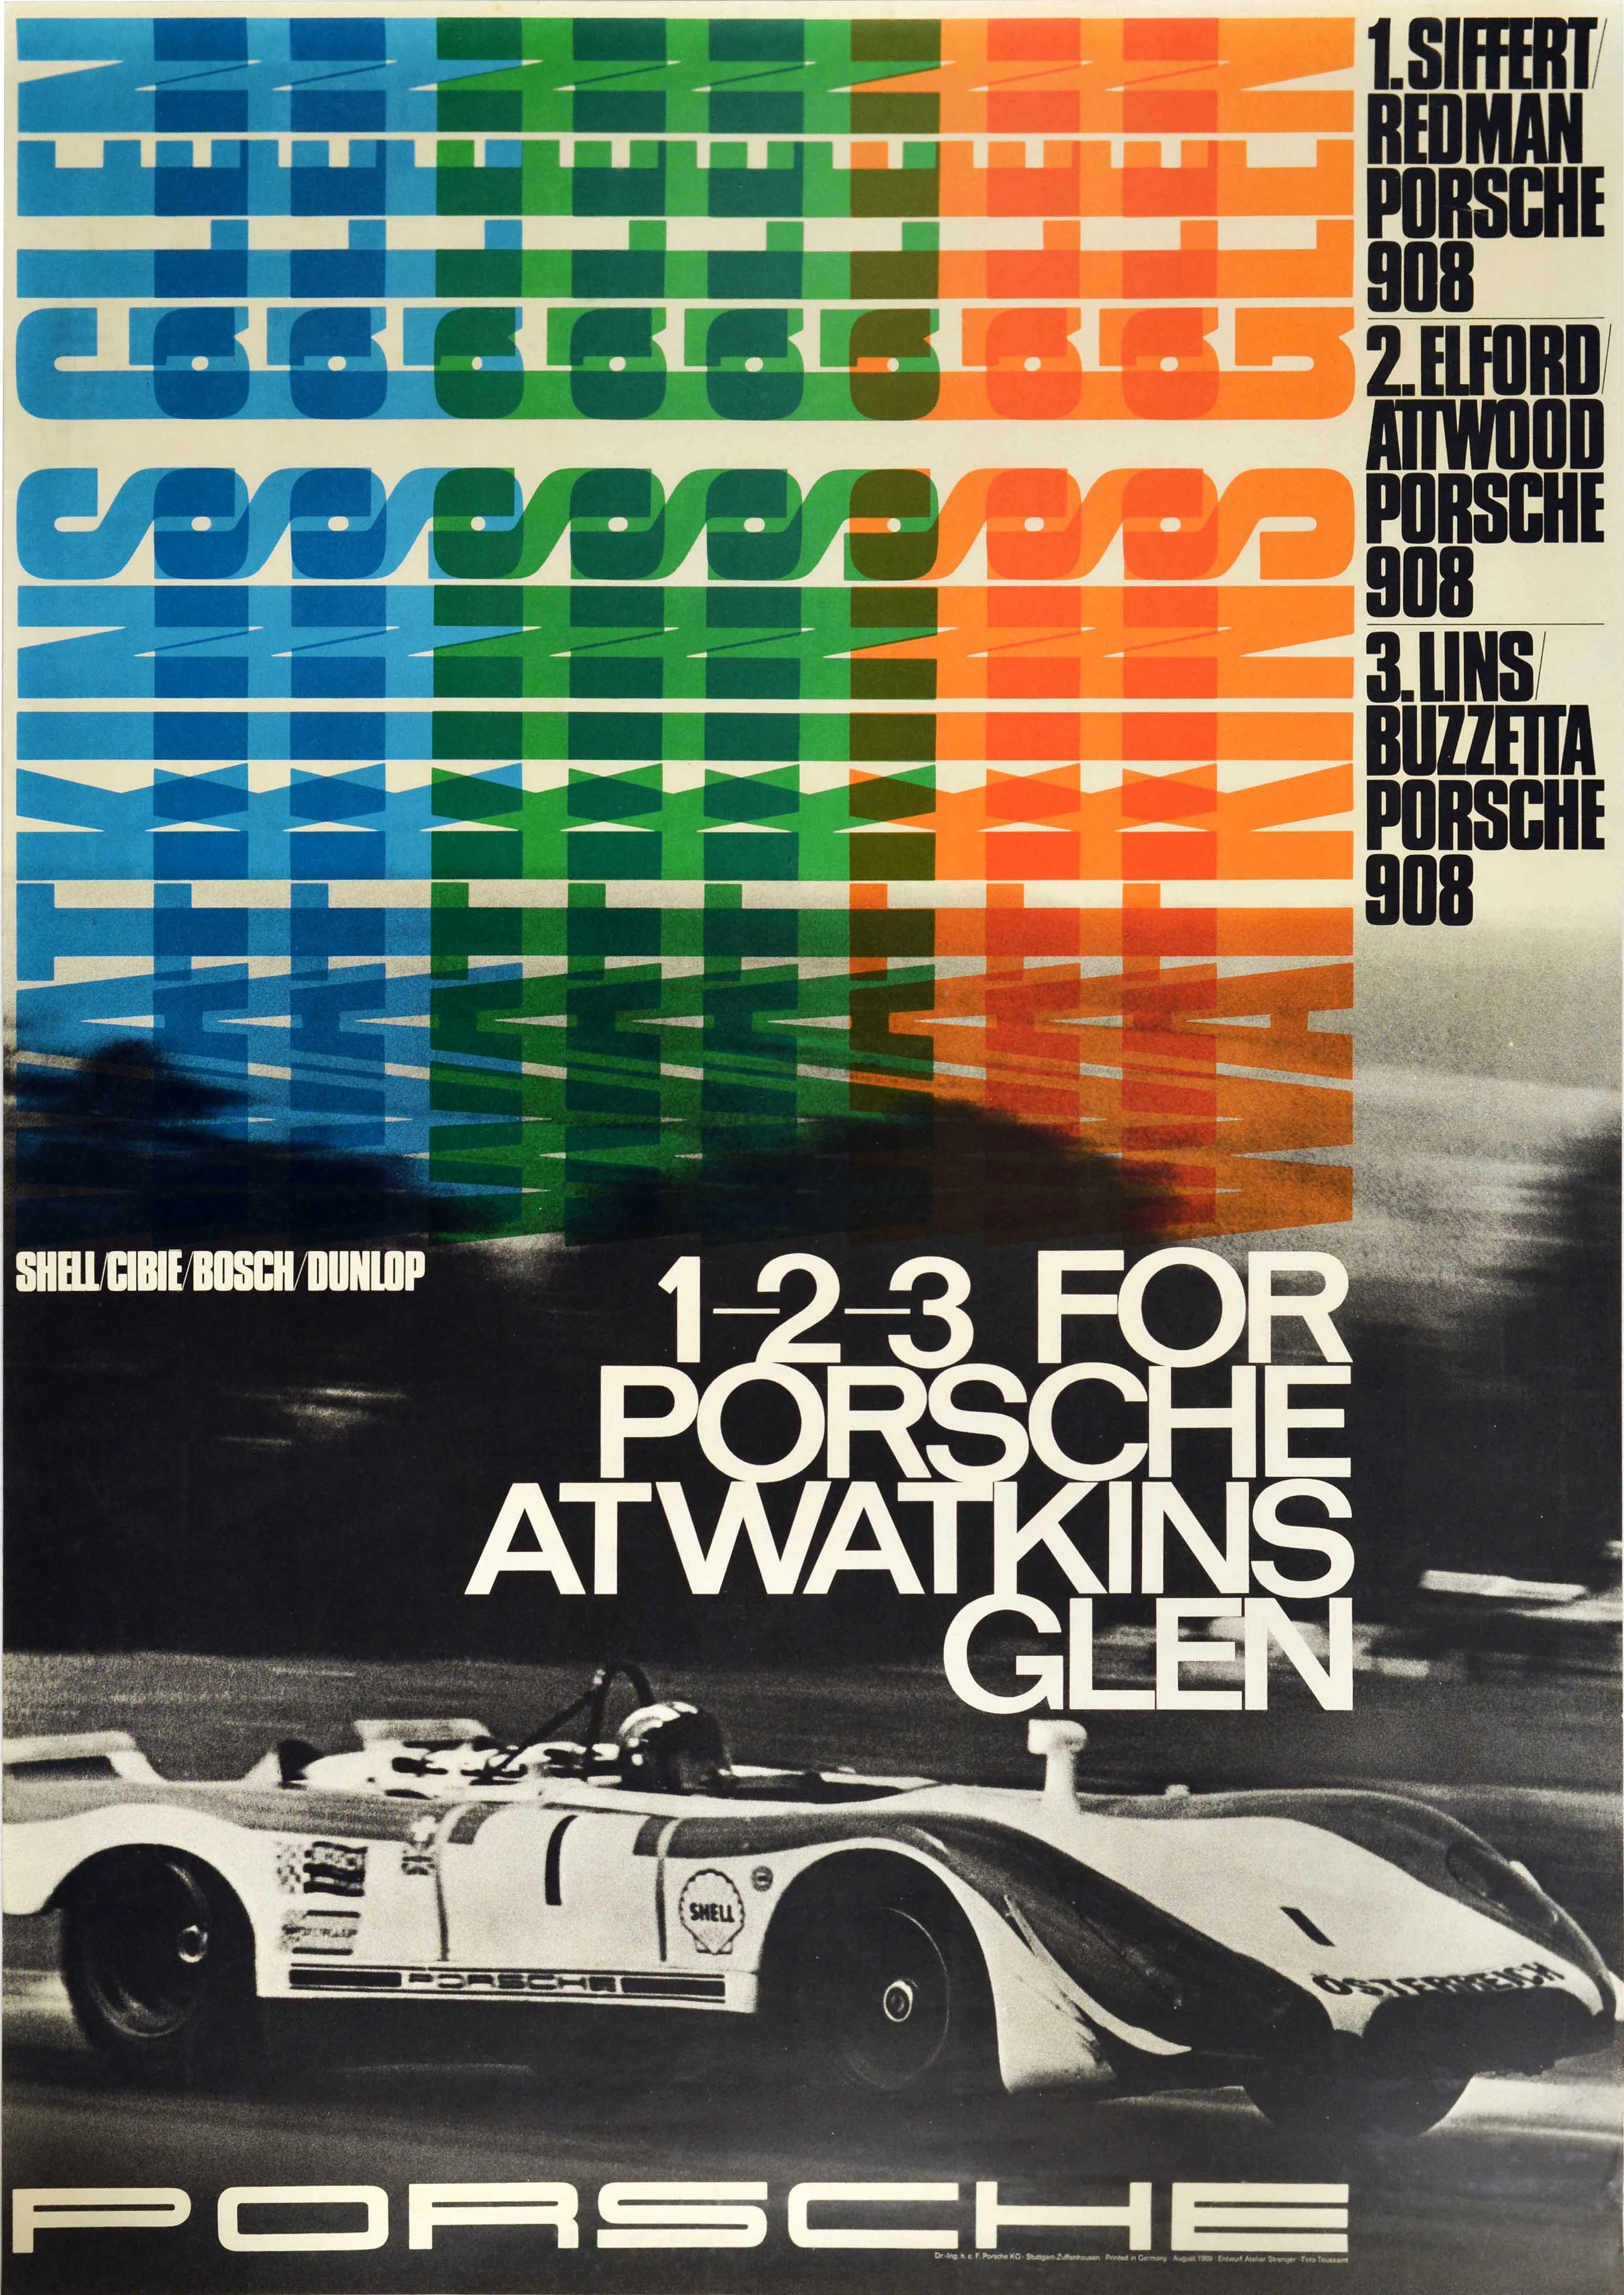 Erich Strenger Print - Original Vintage Auto Racing Poster 1-2-3 For Porsche At Watkins Glen Motorsport